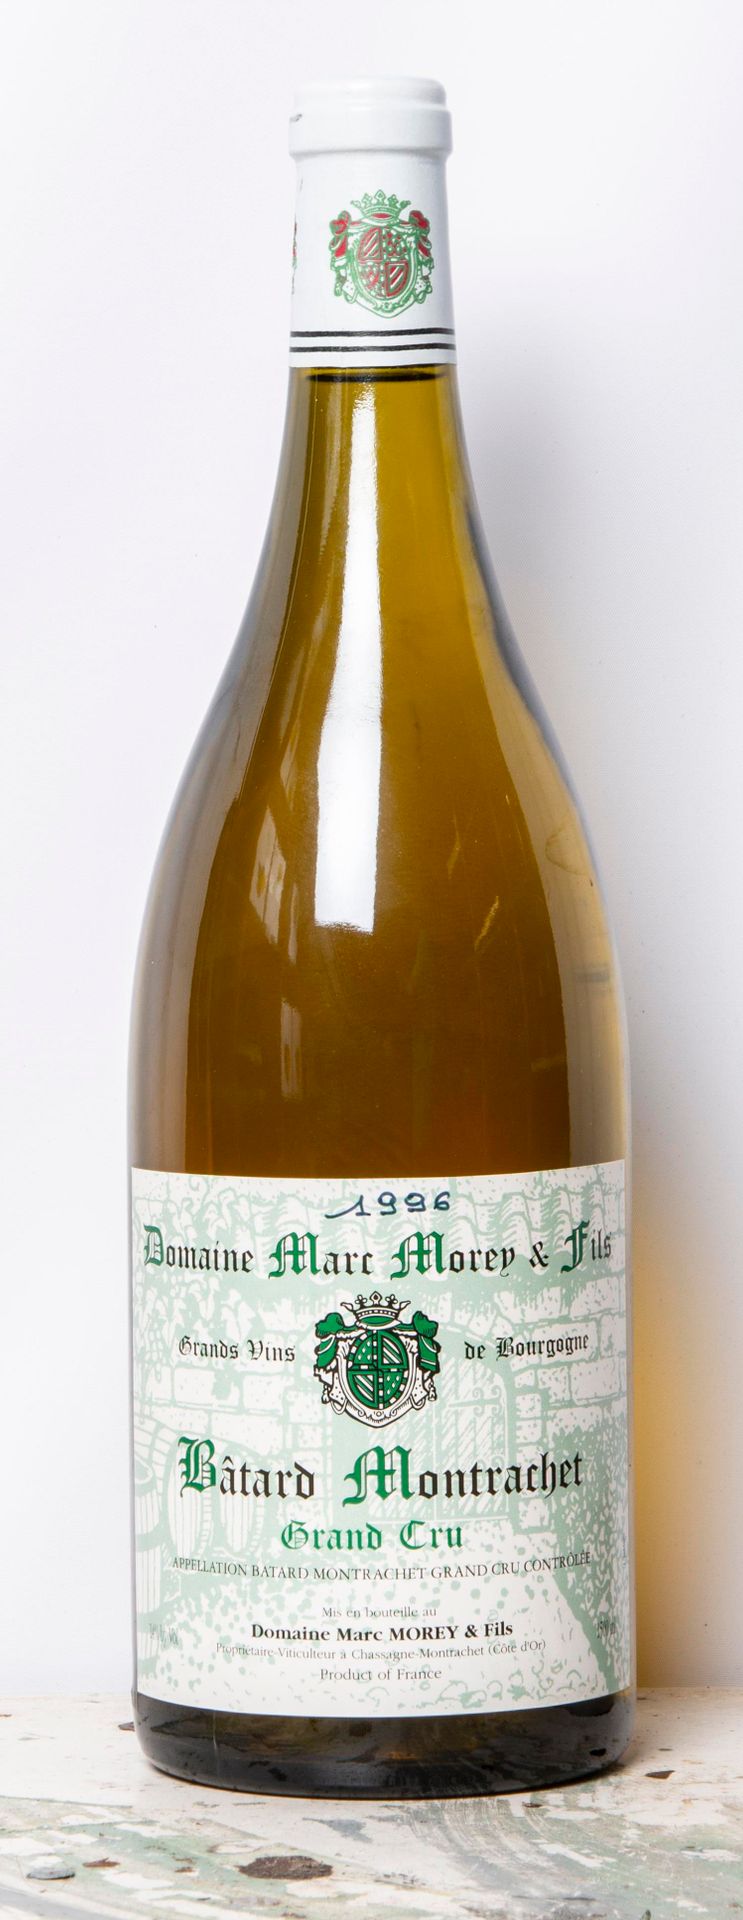 Null Domaine MARC MOREY Bâtard-Montrachet Grand Cru 1996, Bourgogne (F)
1 magnum&hellip;